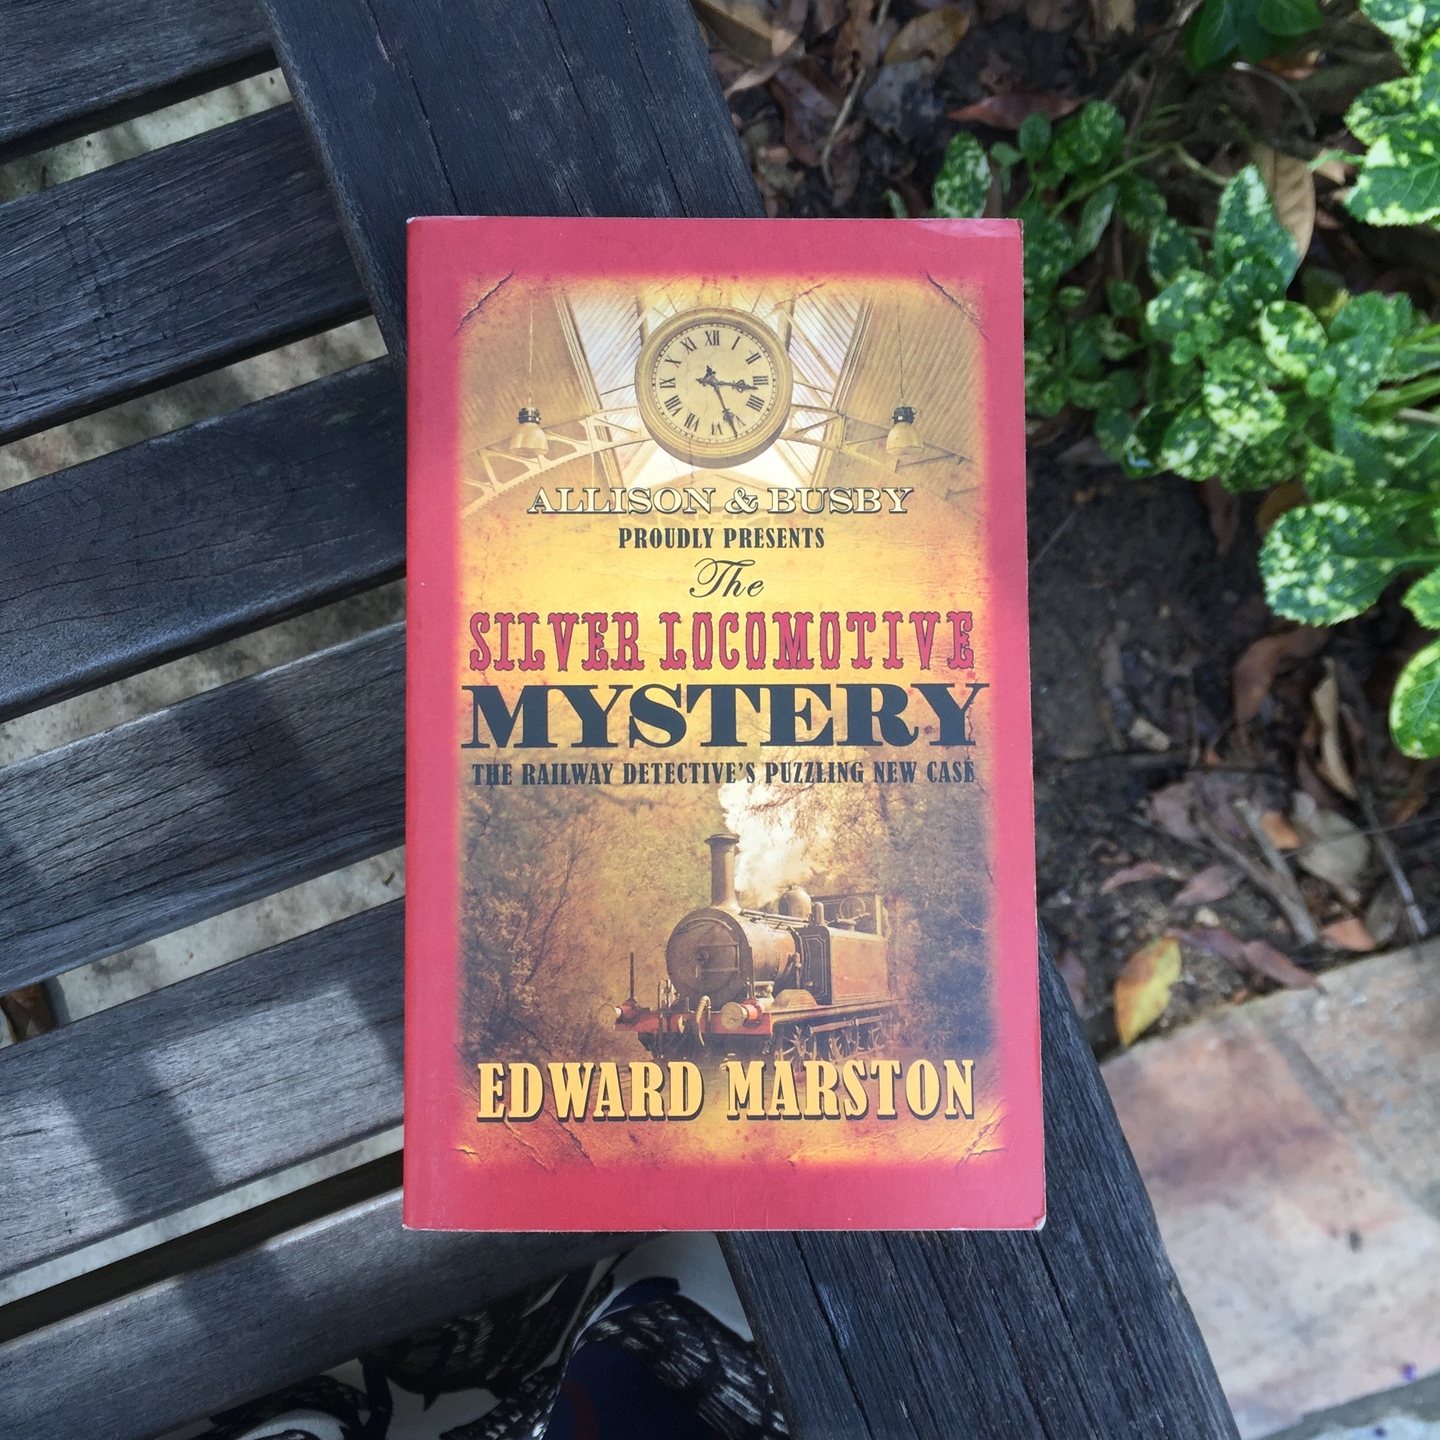 The Silver Locomotive Mystery by Edward Marston [Paperback]